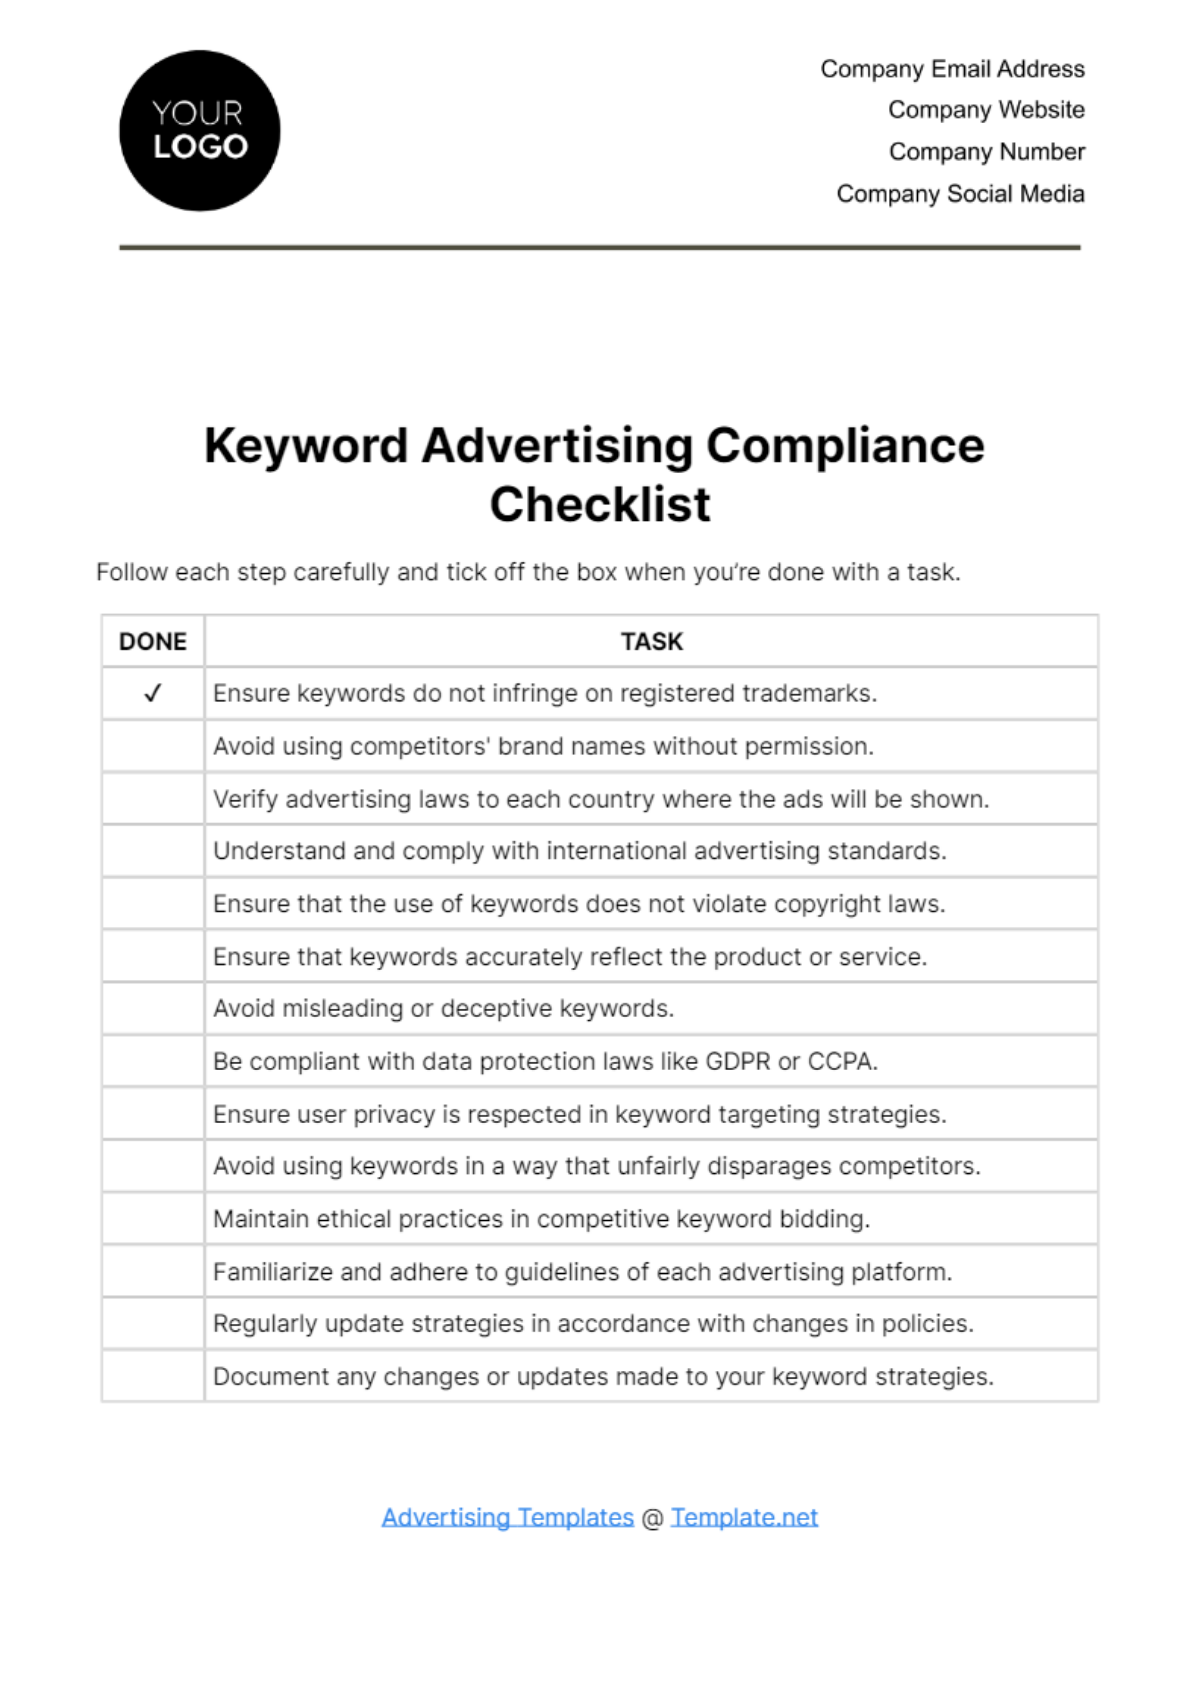 Keyword Advertising Compliance Checklist Template